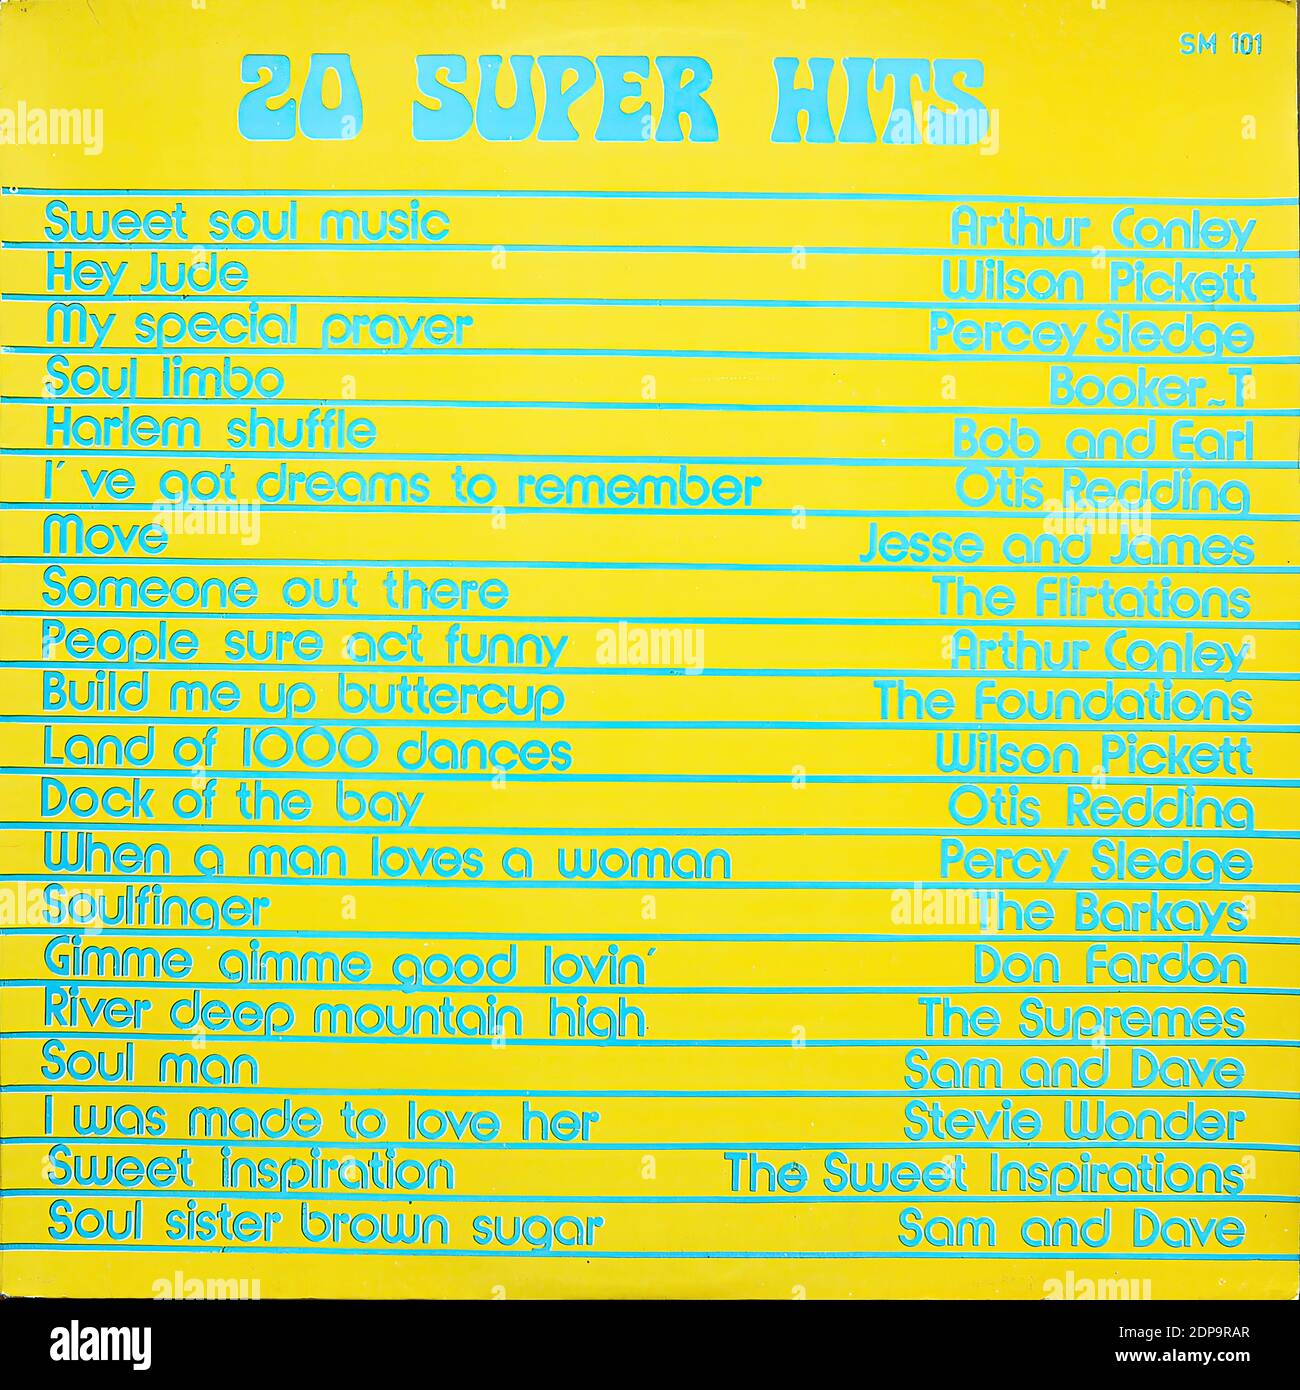 Soul Music - 20 Super Hits, SM 101 - copertina di album in vinile d'epoca Foto Stock